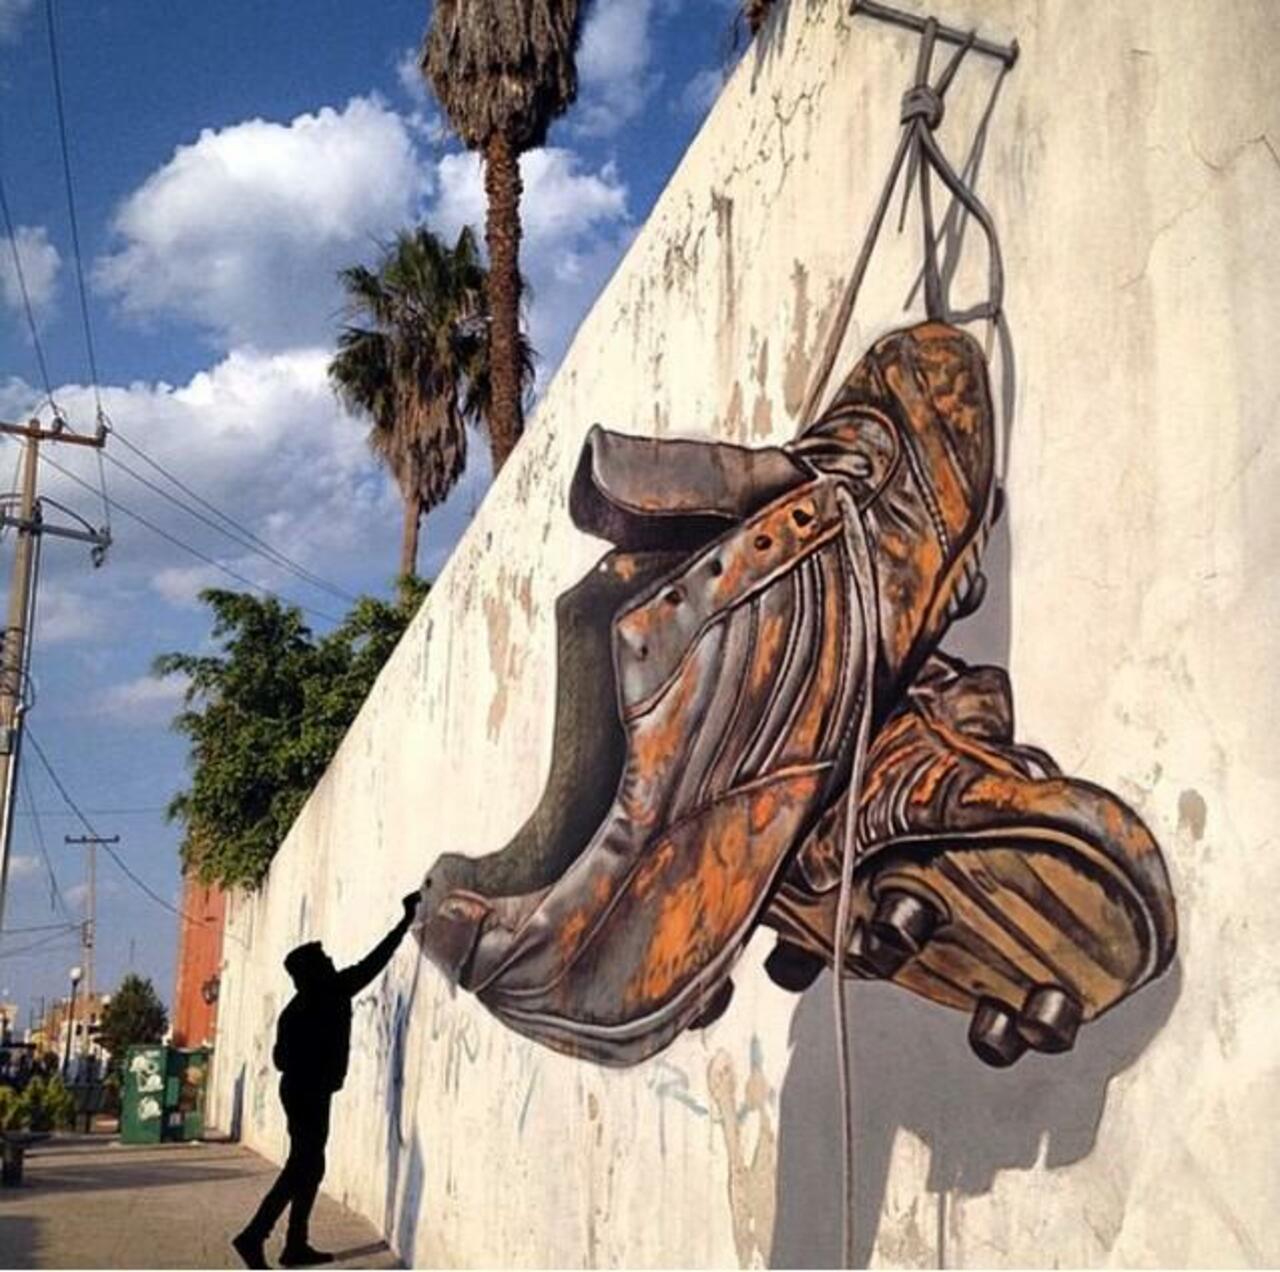 Awesome anamorphic 3D Street Art by Juandres Vera 

#art #graffiti #mural #streetart http://t.co/tubYpsMlIB